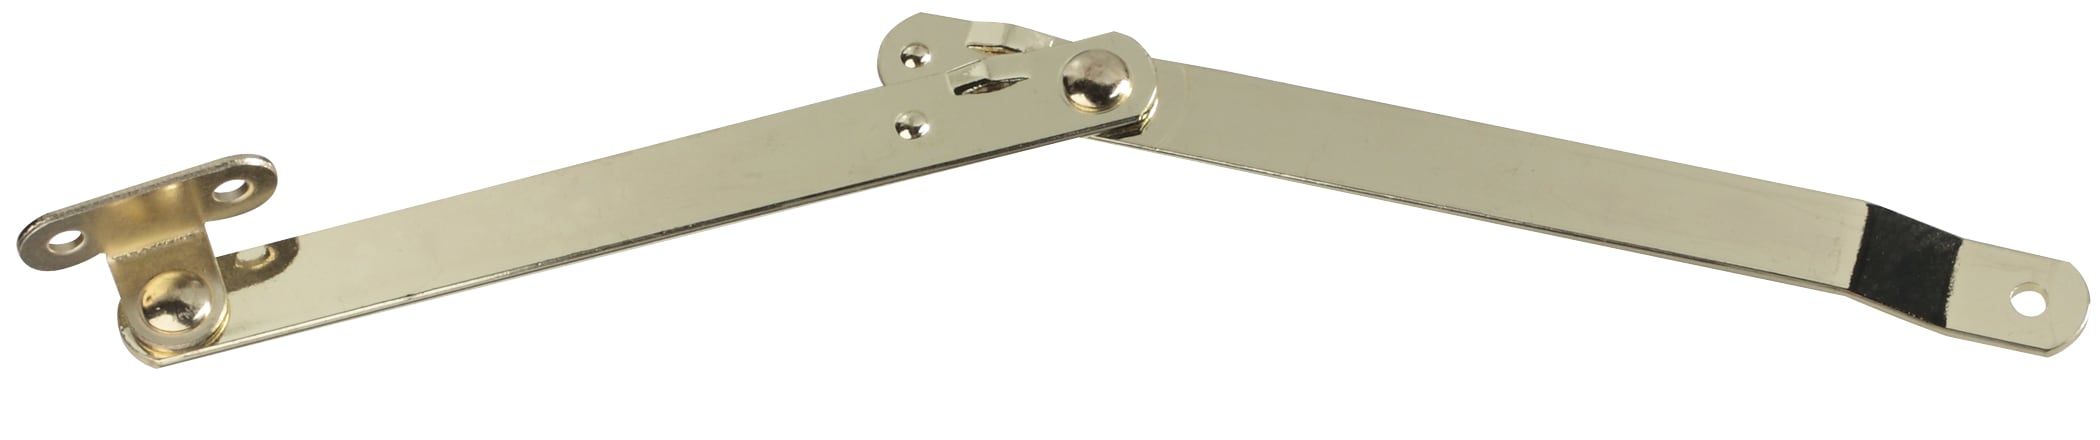 4 Folding Hinge 90 Degrees, Stainless Steel Self-Locking Folding